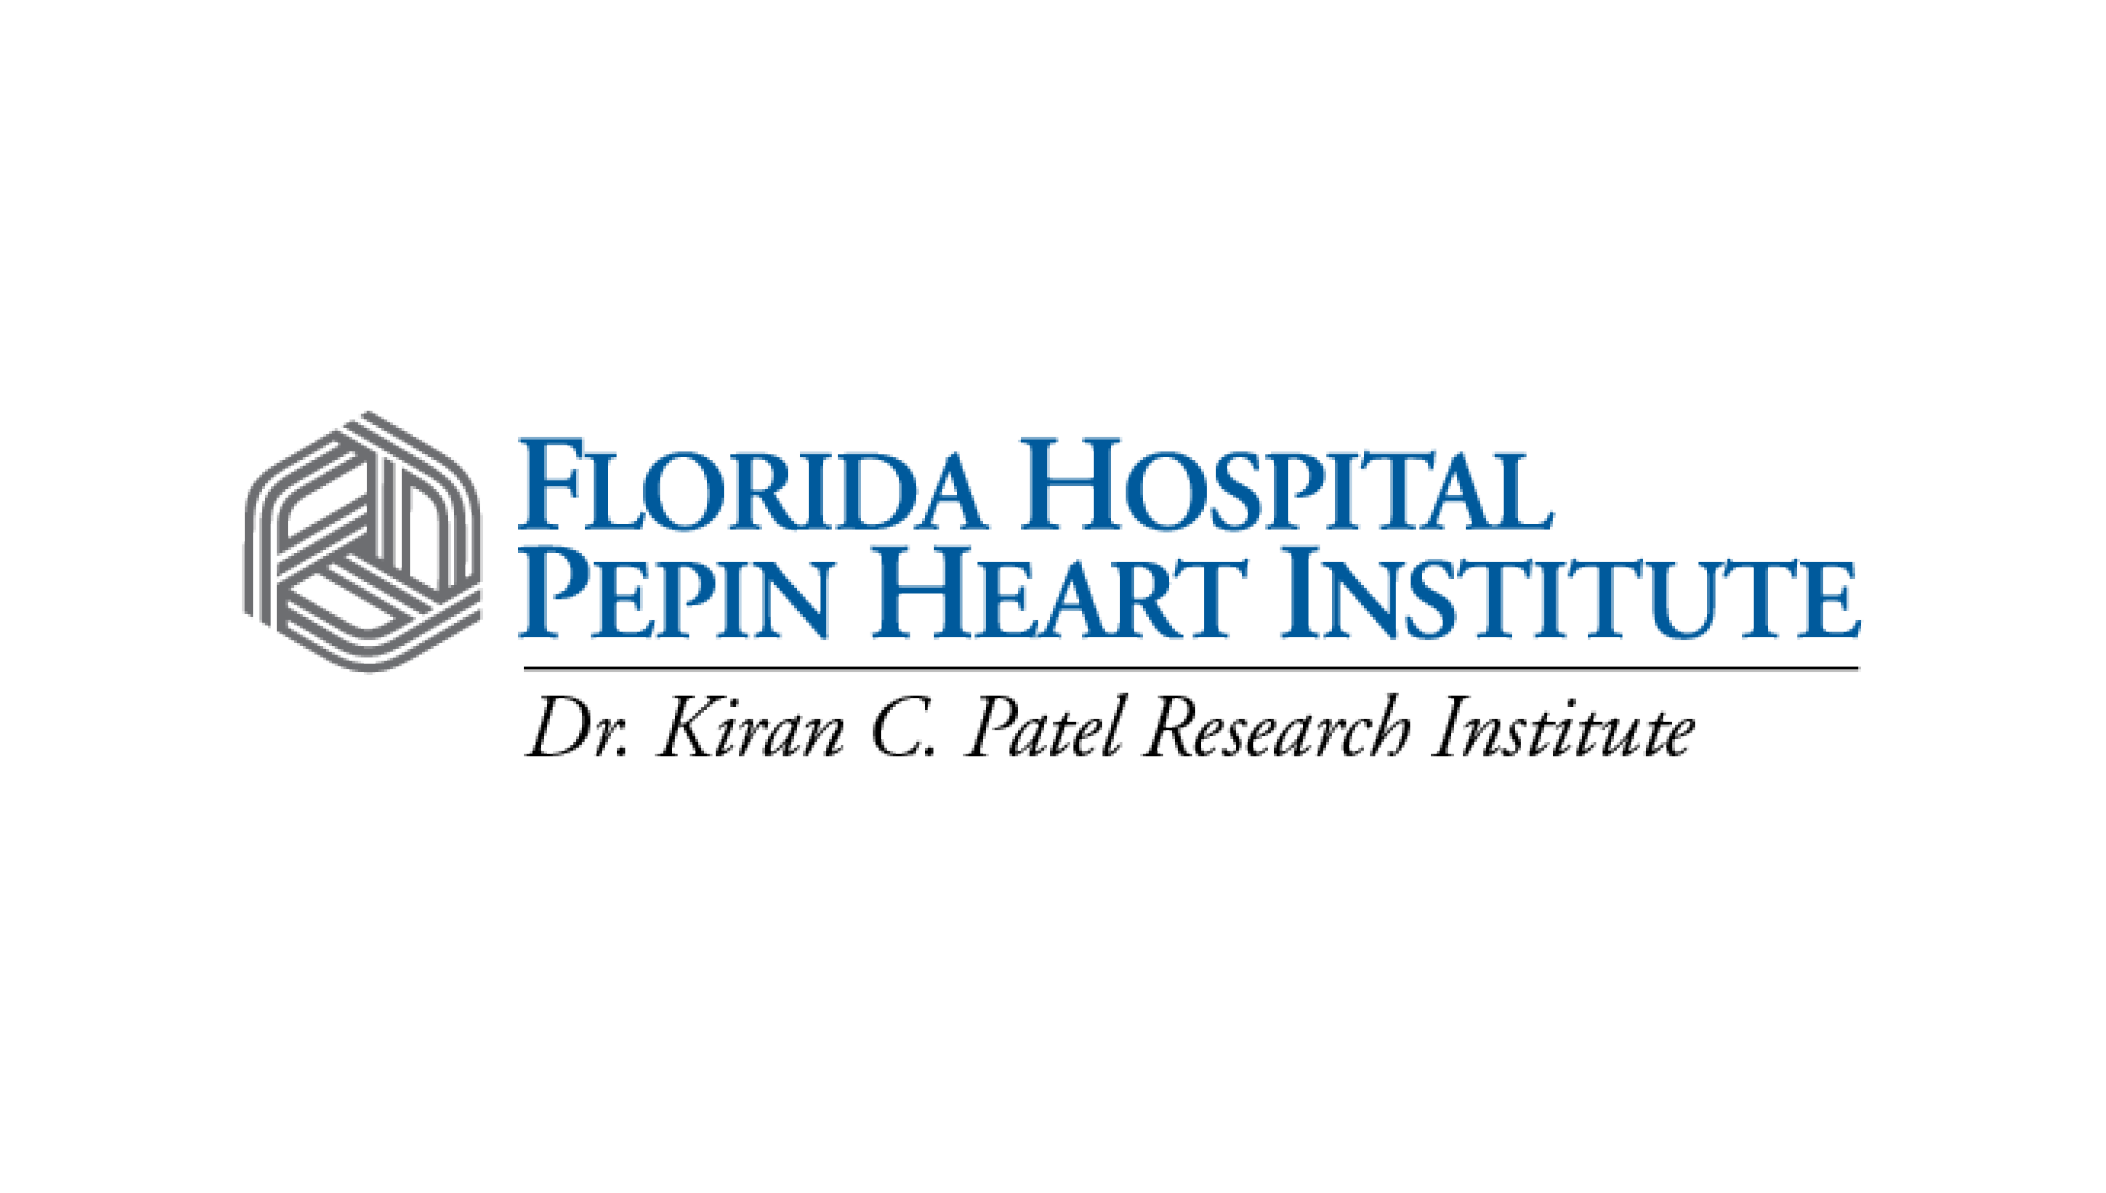 Florida Hospital Pepin Heart Institute